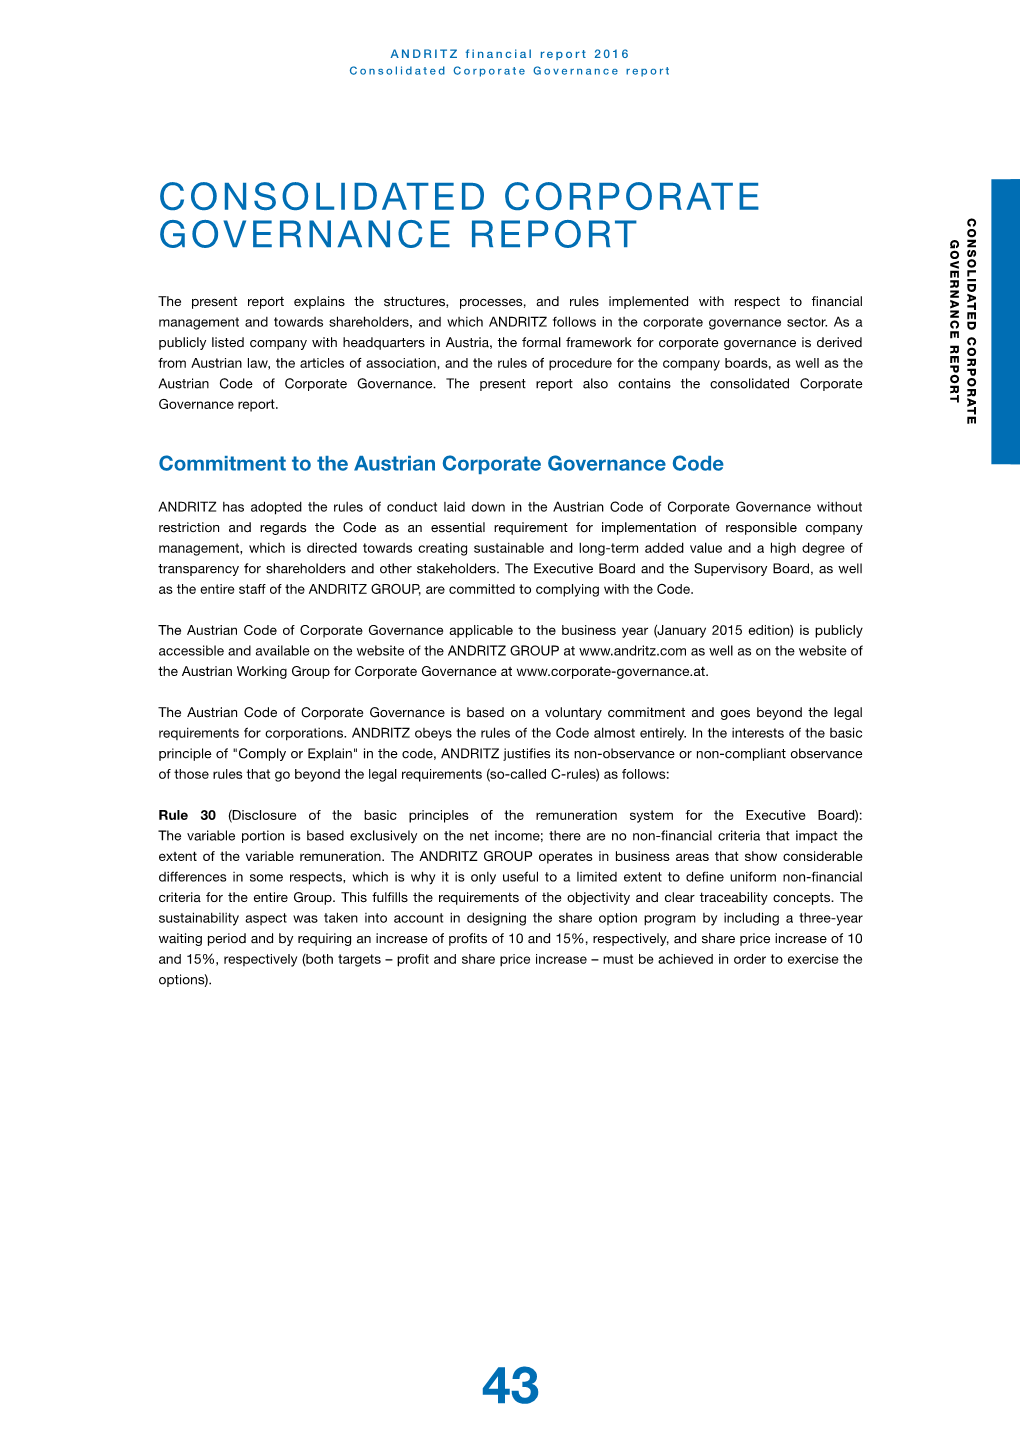 ANDRITZ Corporate Governance Report 2016